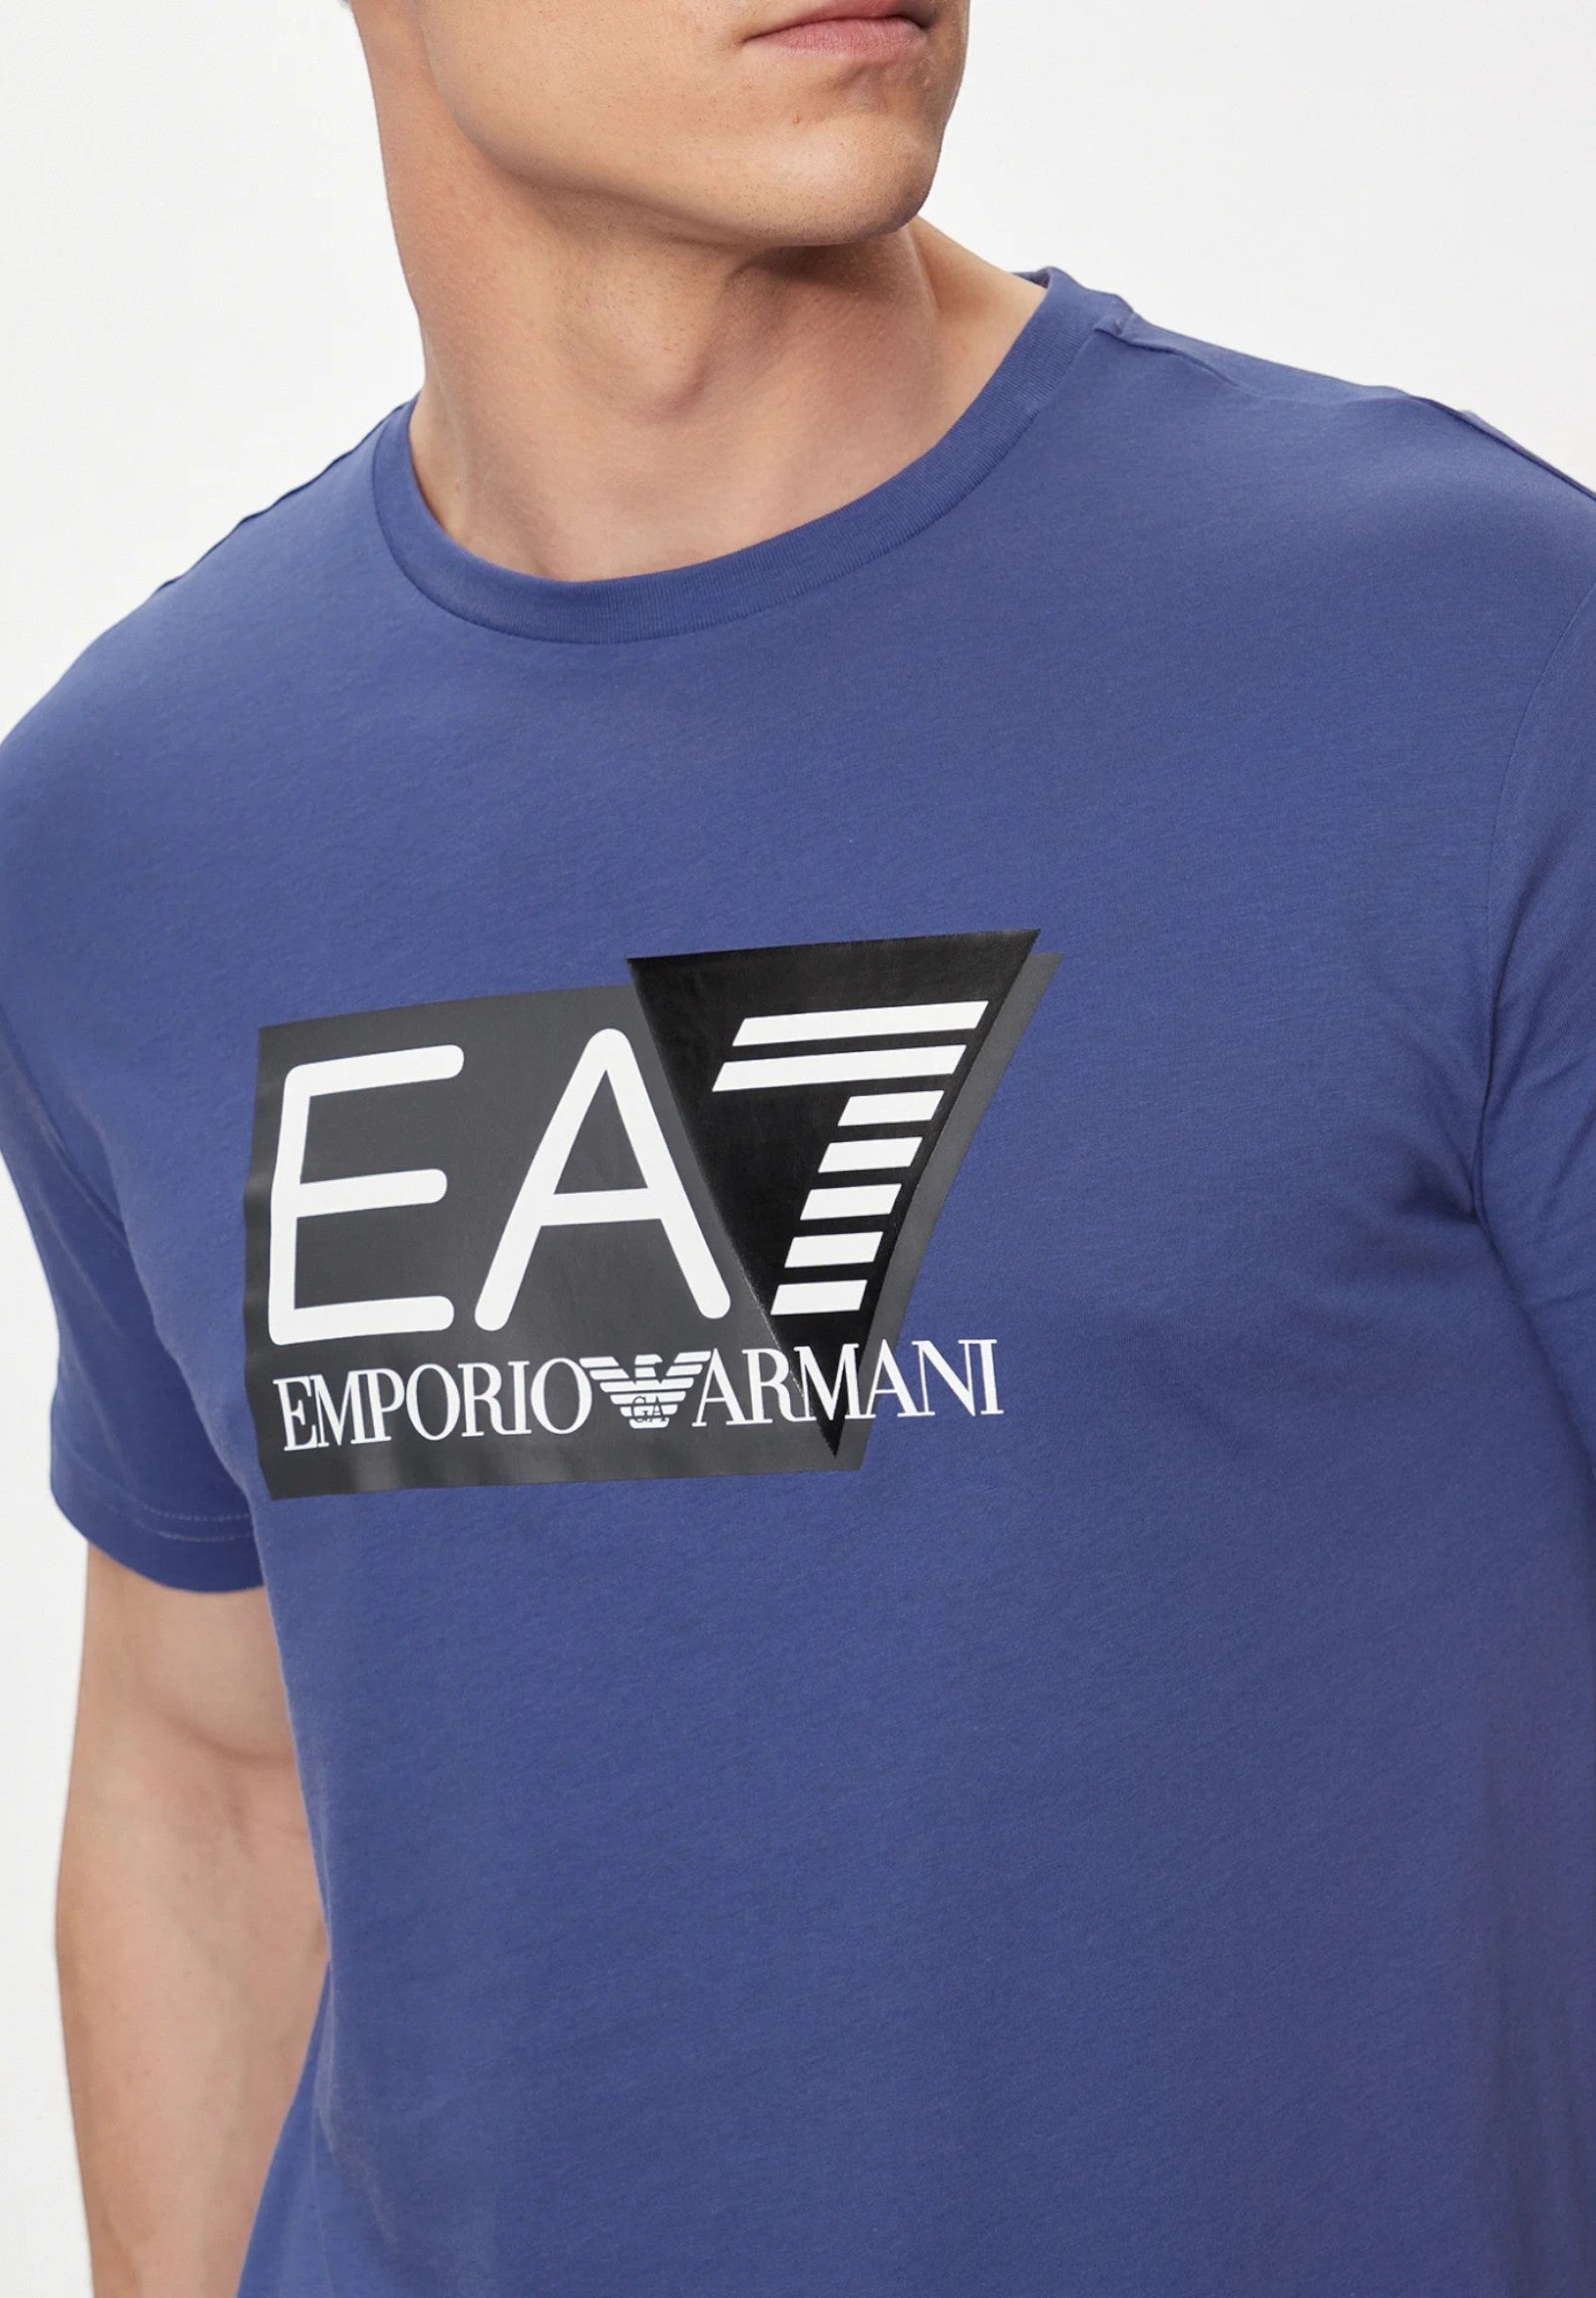 Ea7 Emporio Armani T-Shirt* 3dpt81 Marlin